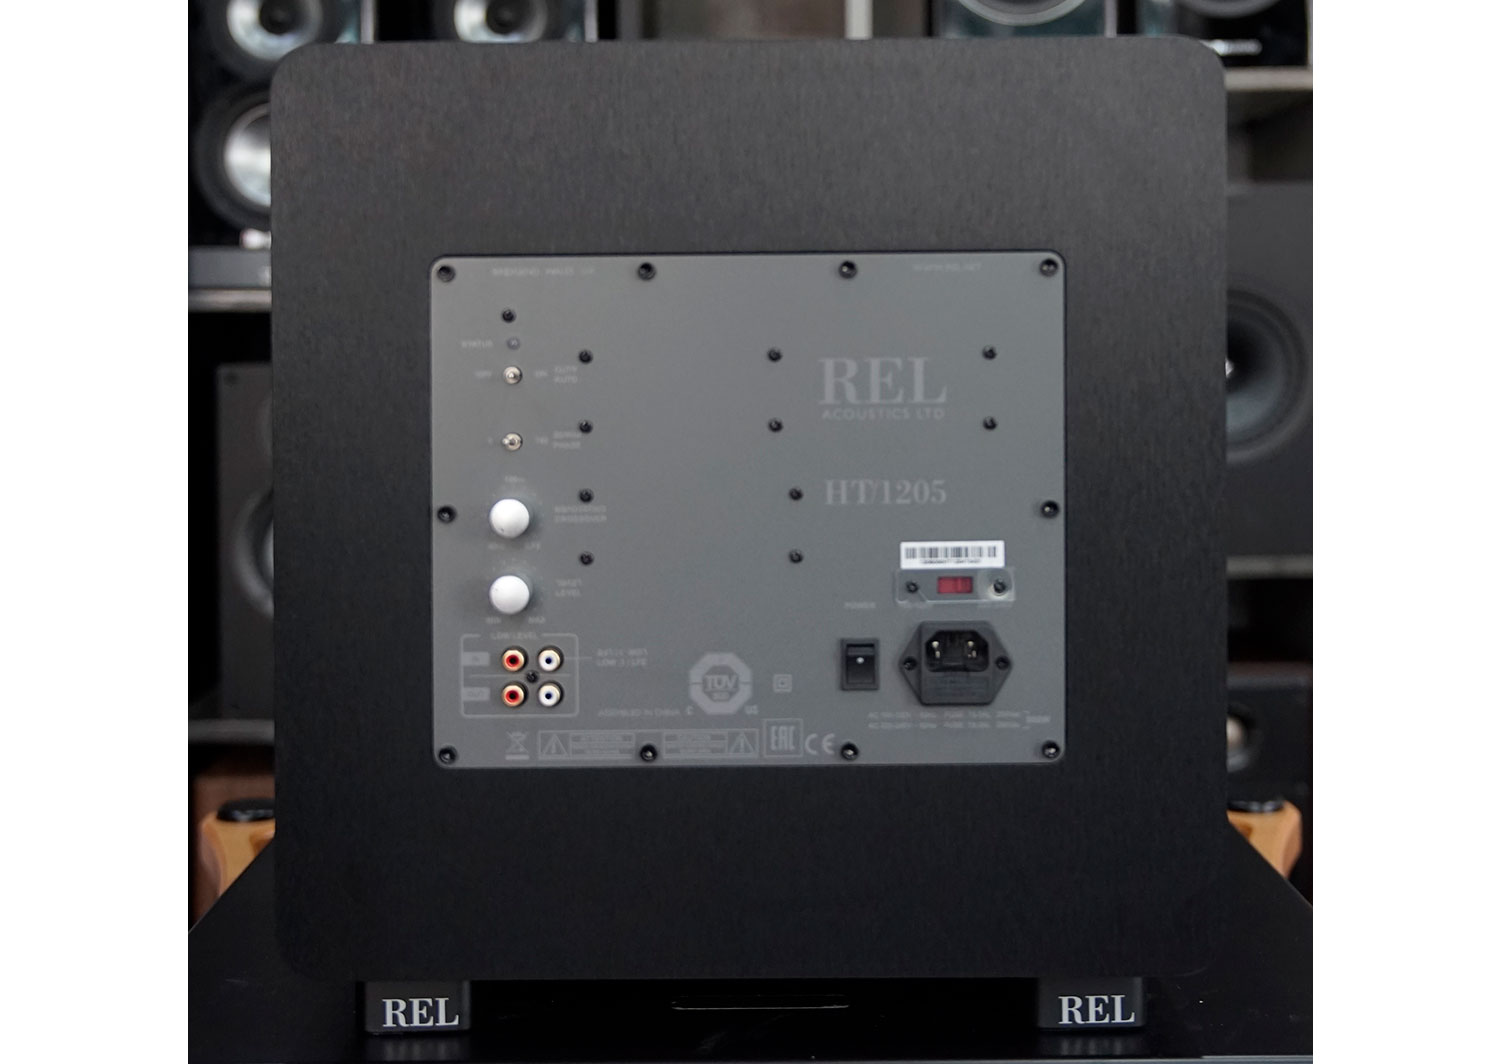 REL HT-1205 (Black)
สินค้าตัวโชว์ (สุขุมวิท 101/1) 